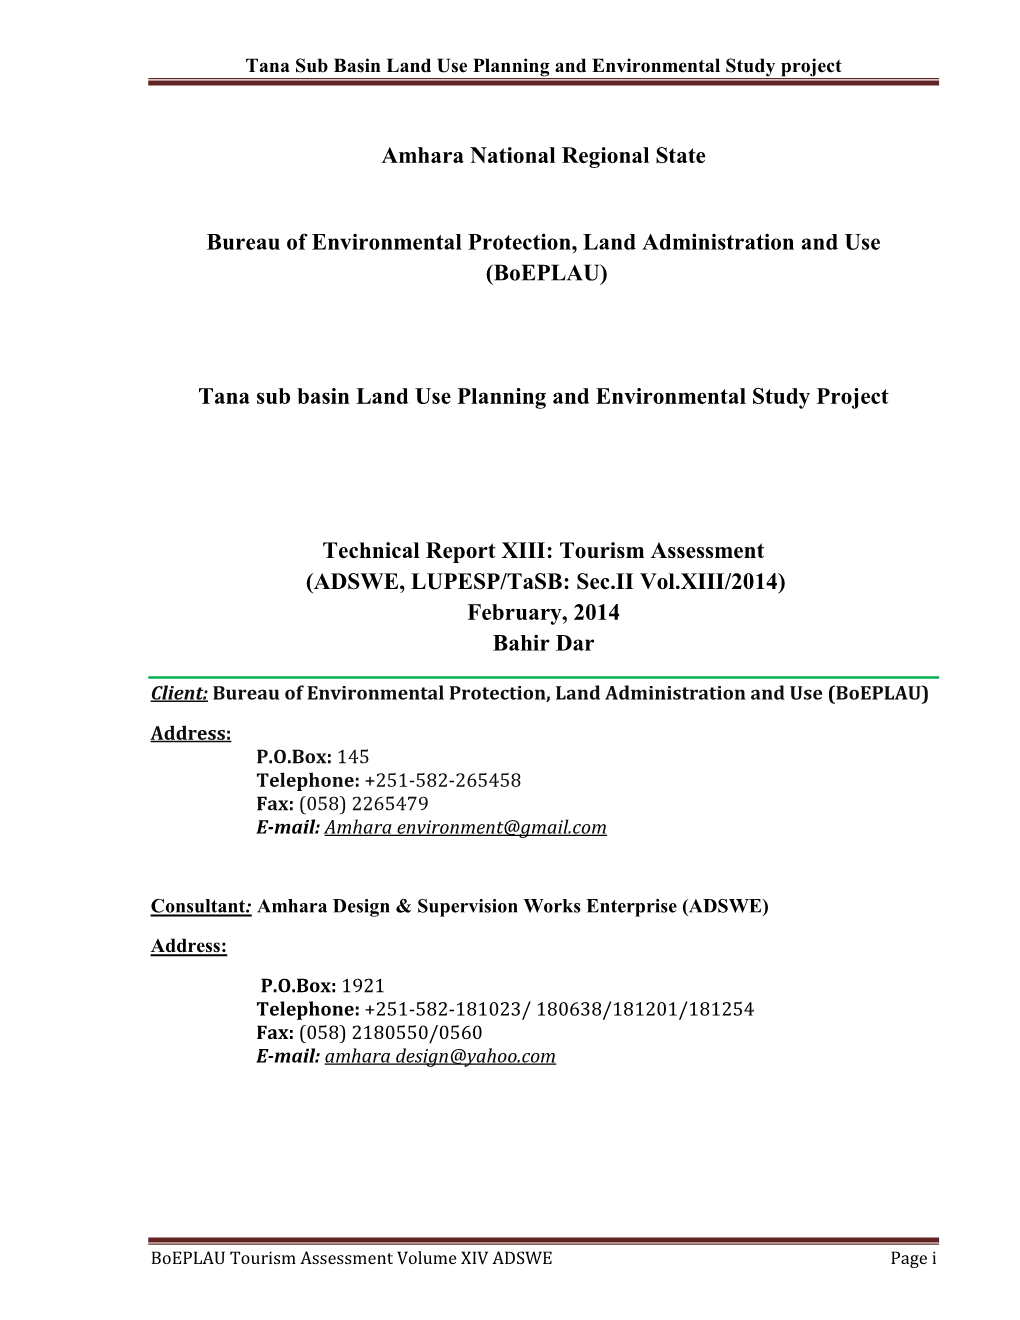 Tana Sub Basin Land Use Planning and Environmental Study Project